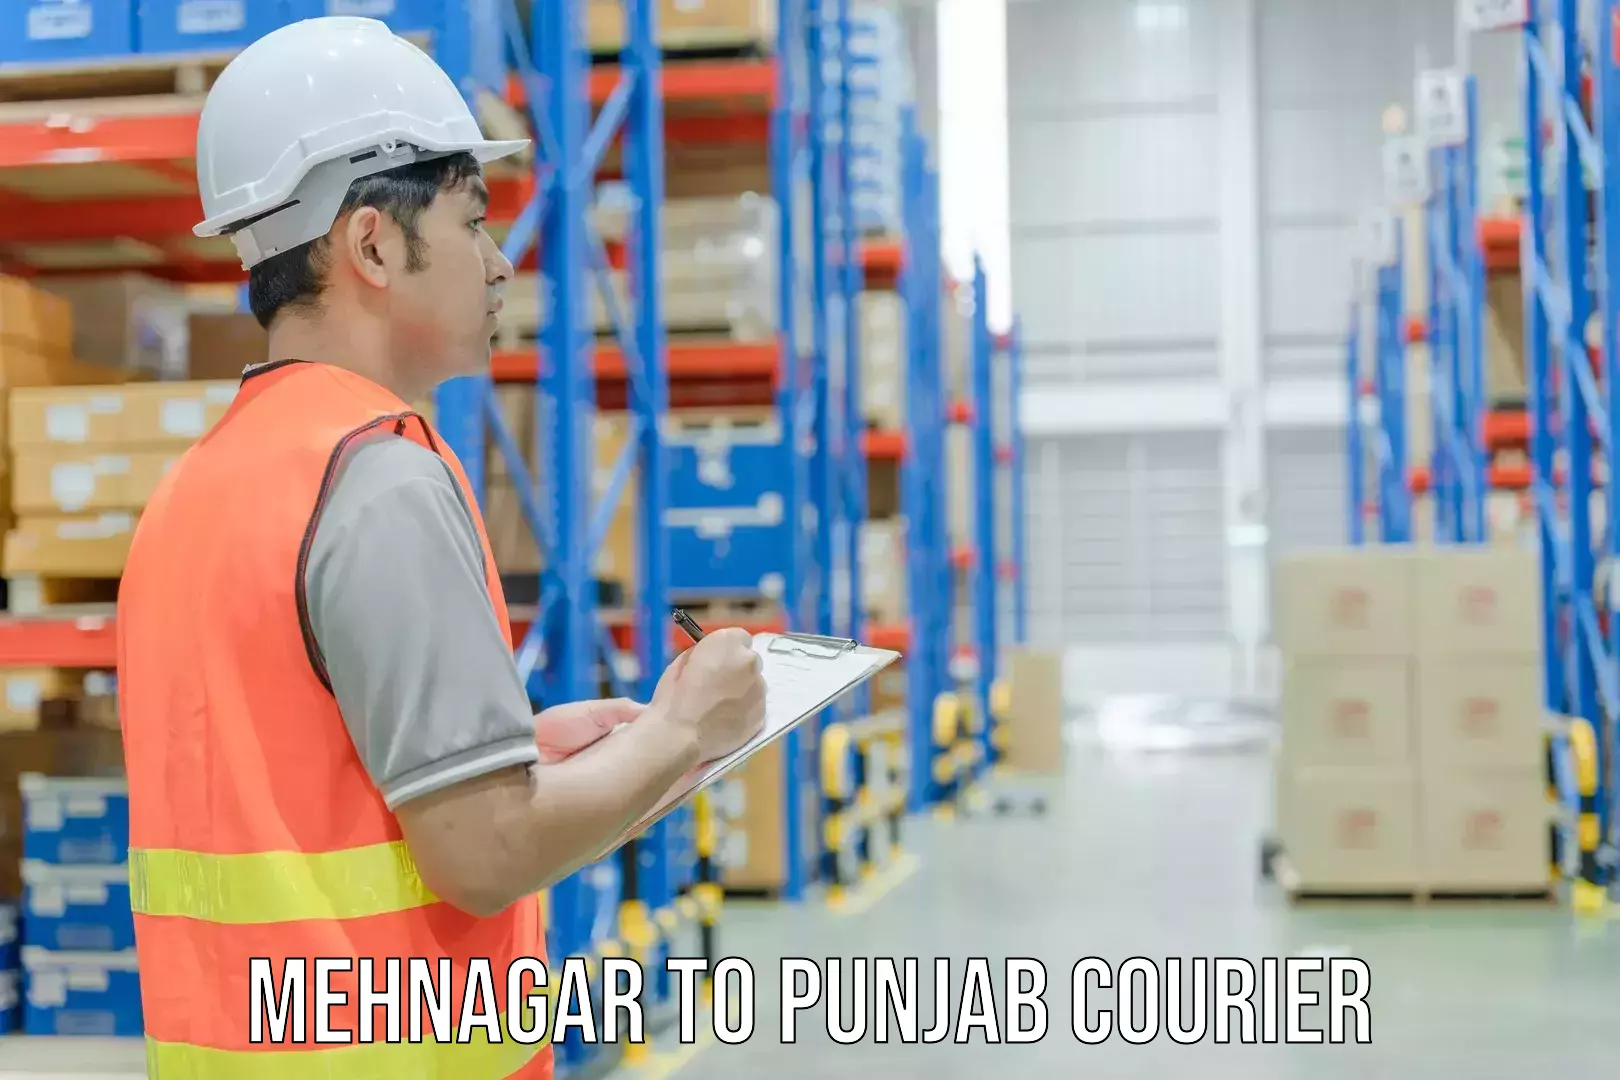 Premium delivery services Mehnagar to Punjab